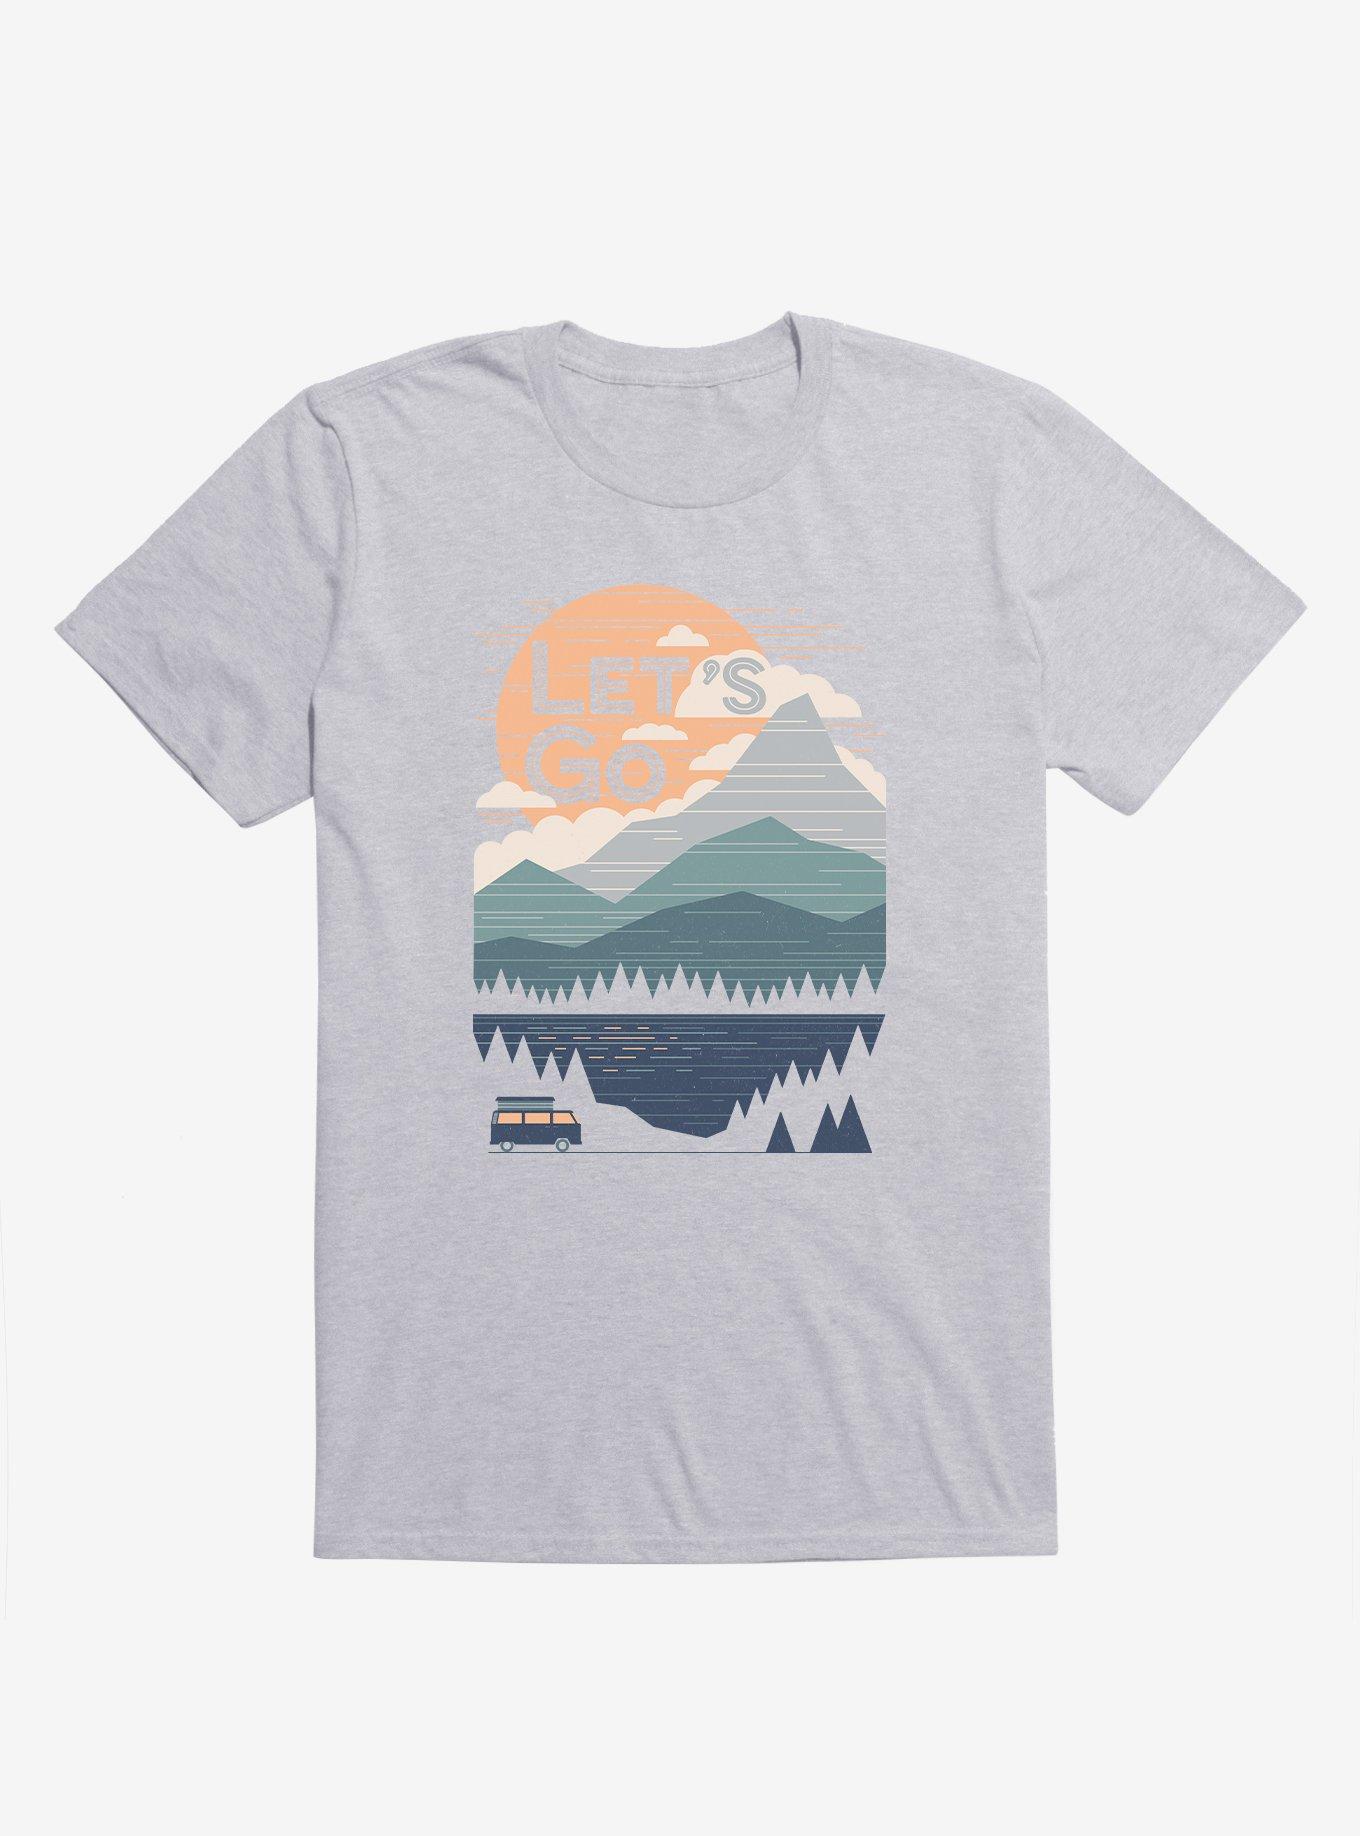 Let's Go Mountains Lake Van Sport Grey T-Shirt - GREY | Hot Topic